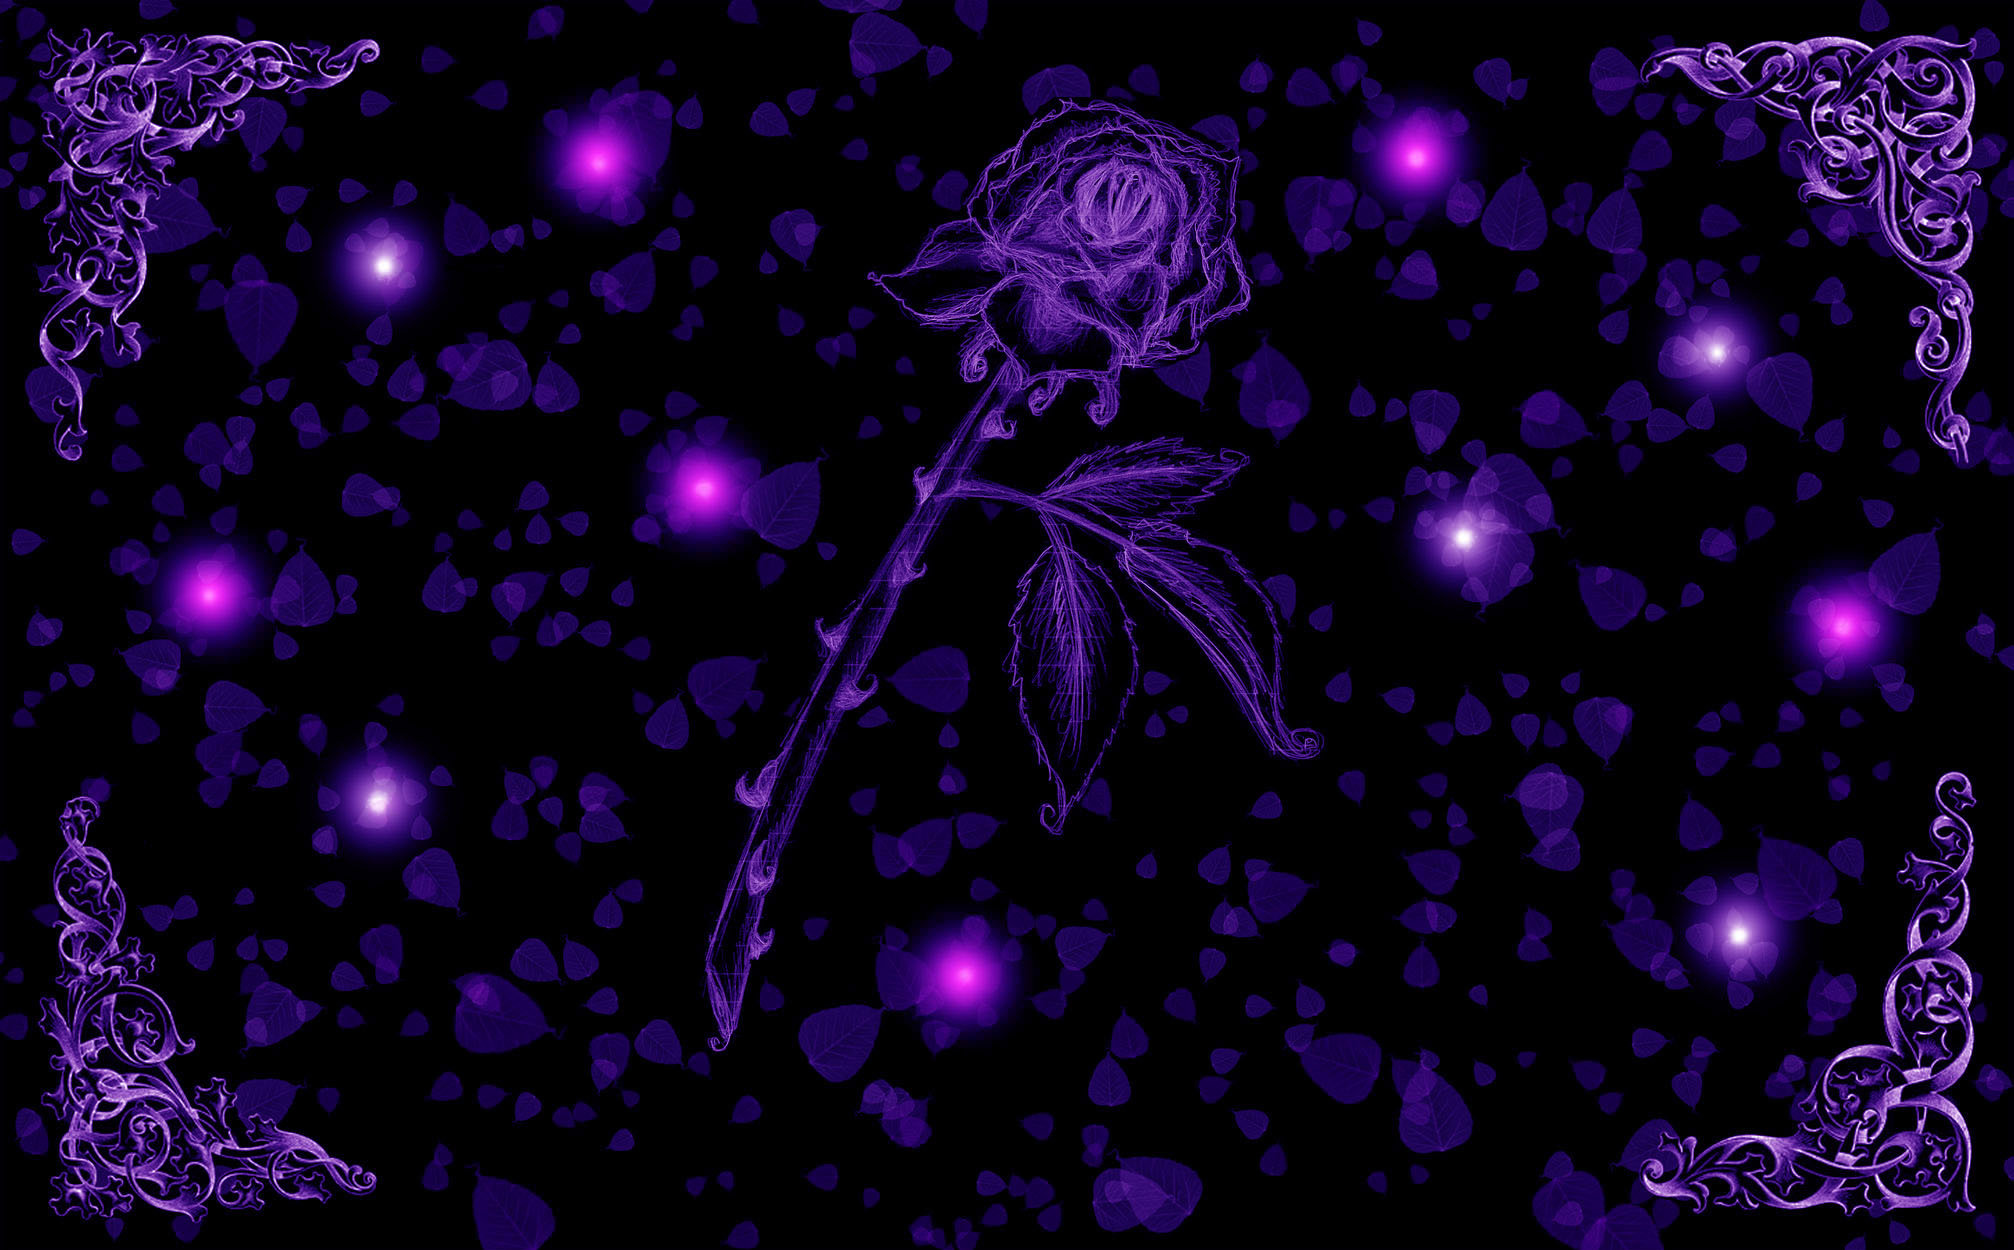 Purple Passion Rose Wallpaper by silverperfume on deviantART